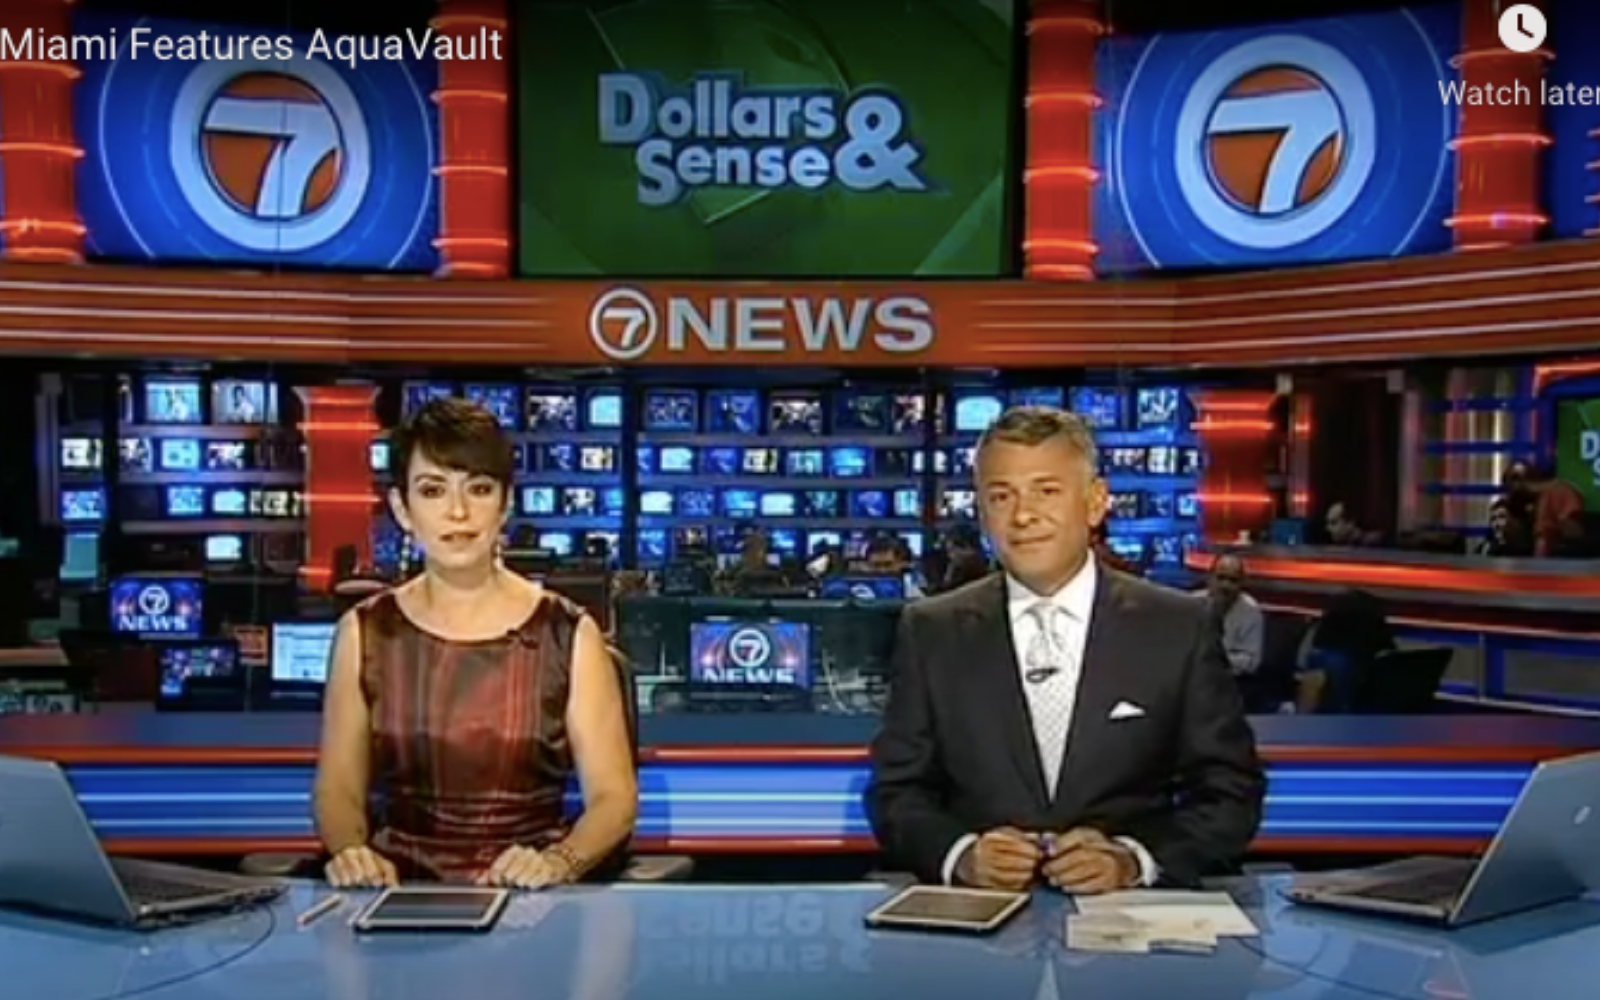 AquaVault featured on Miami TV news!